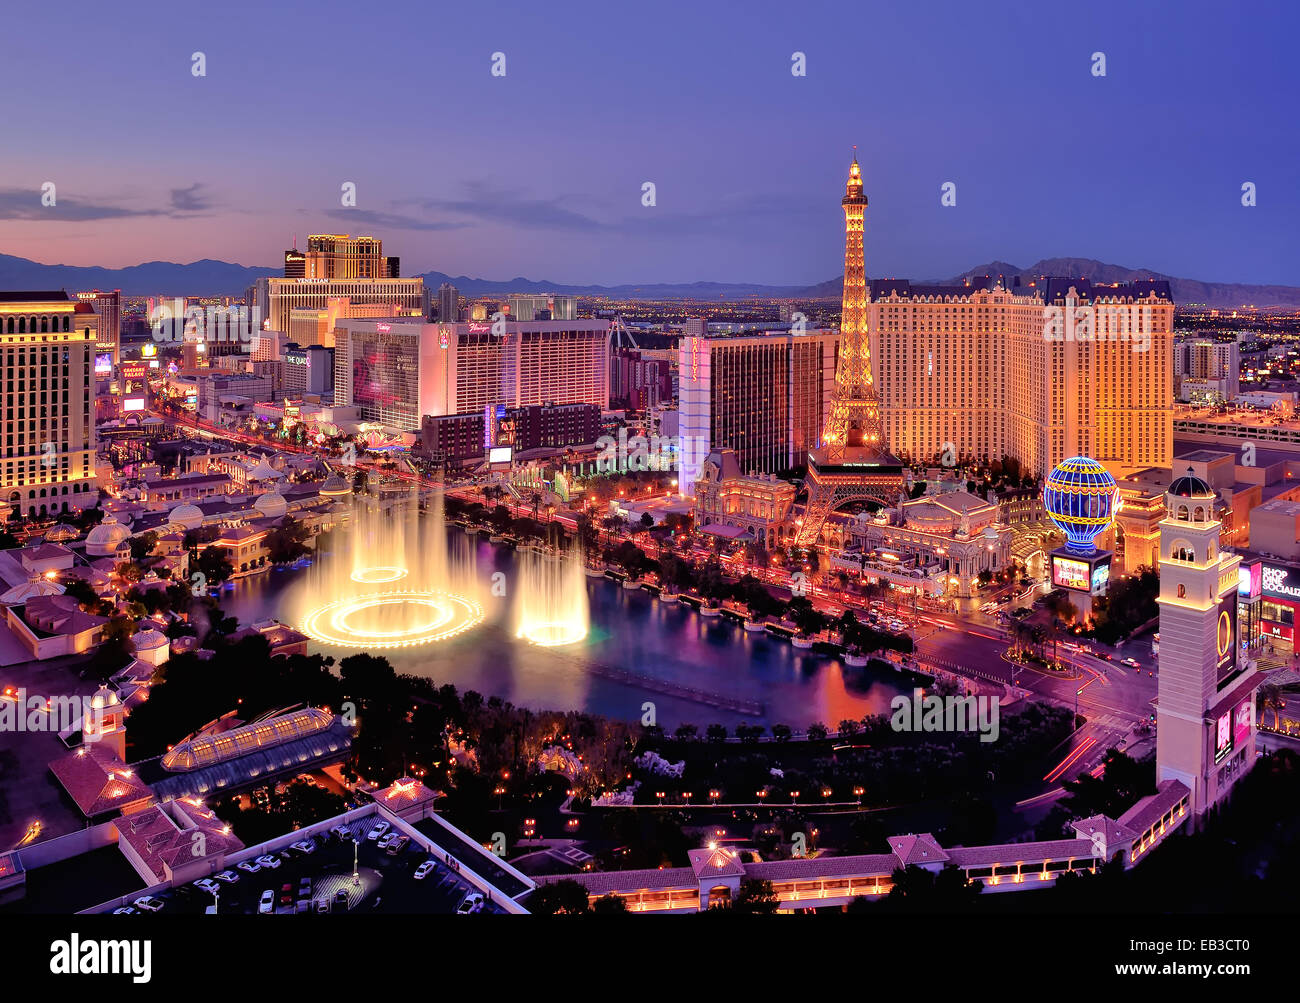 City skyline at night with Bellagio Hotel water fountains, Las Vegas, Nevada, USA Stock Photo